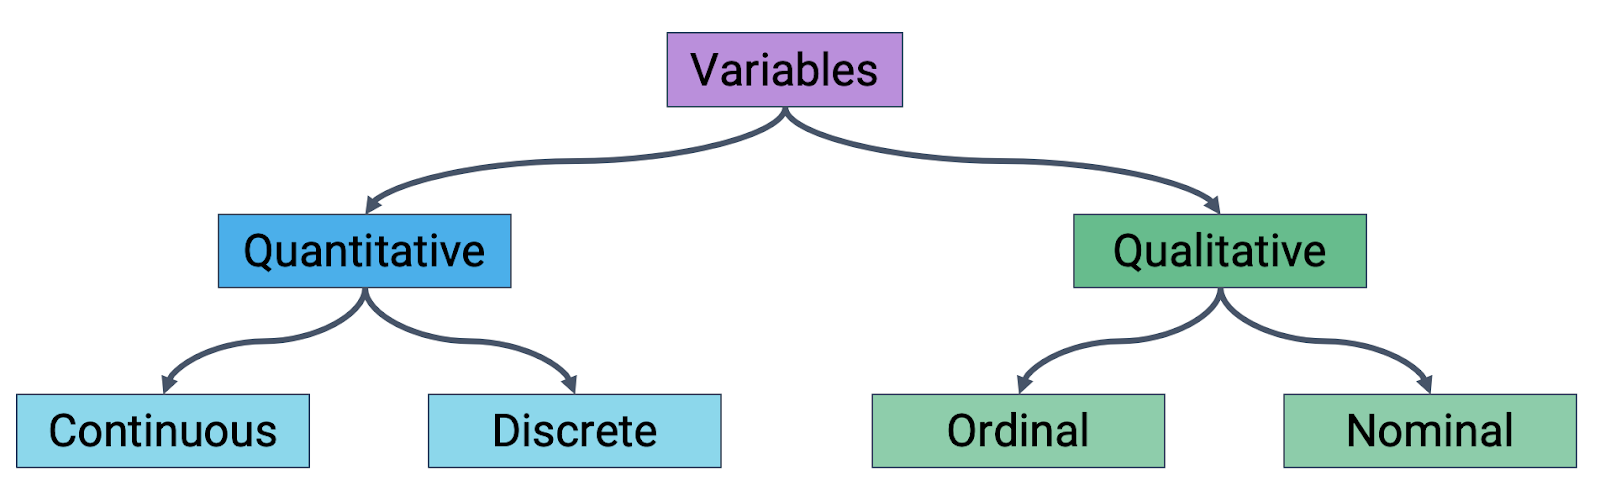 variable_types_diagram